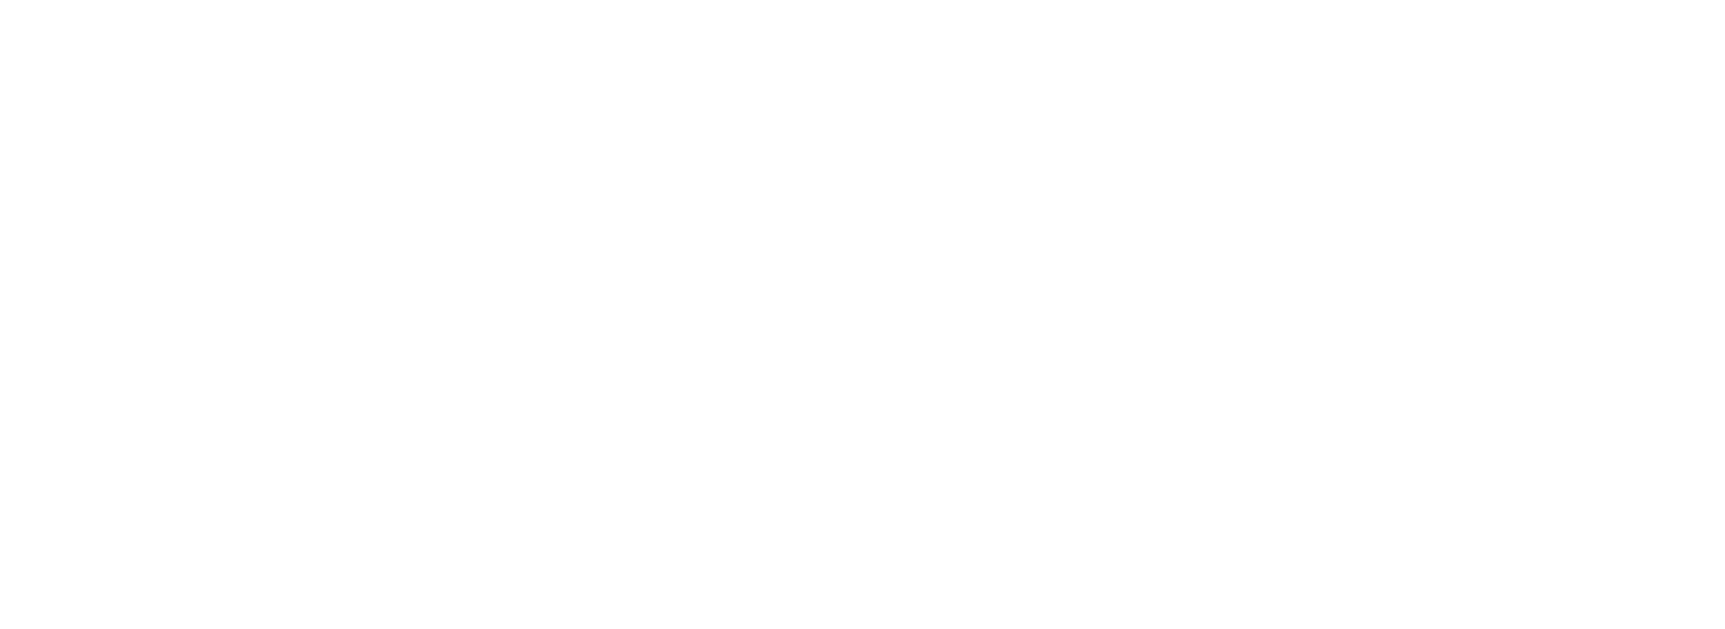 Variety Australia